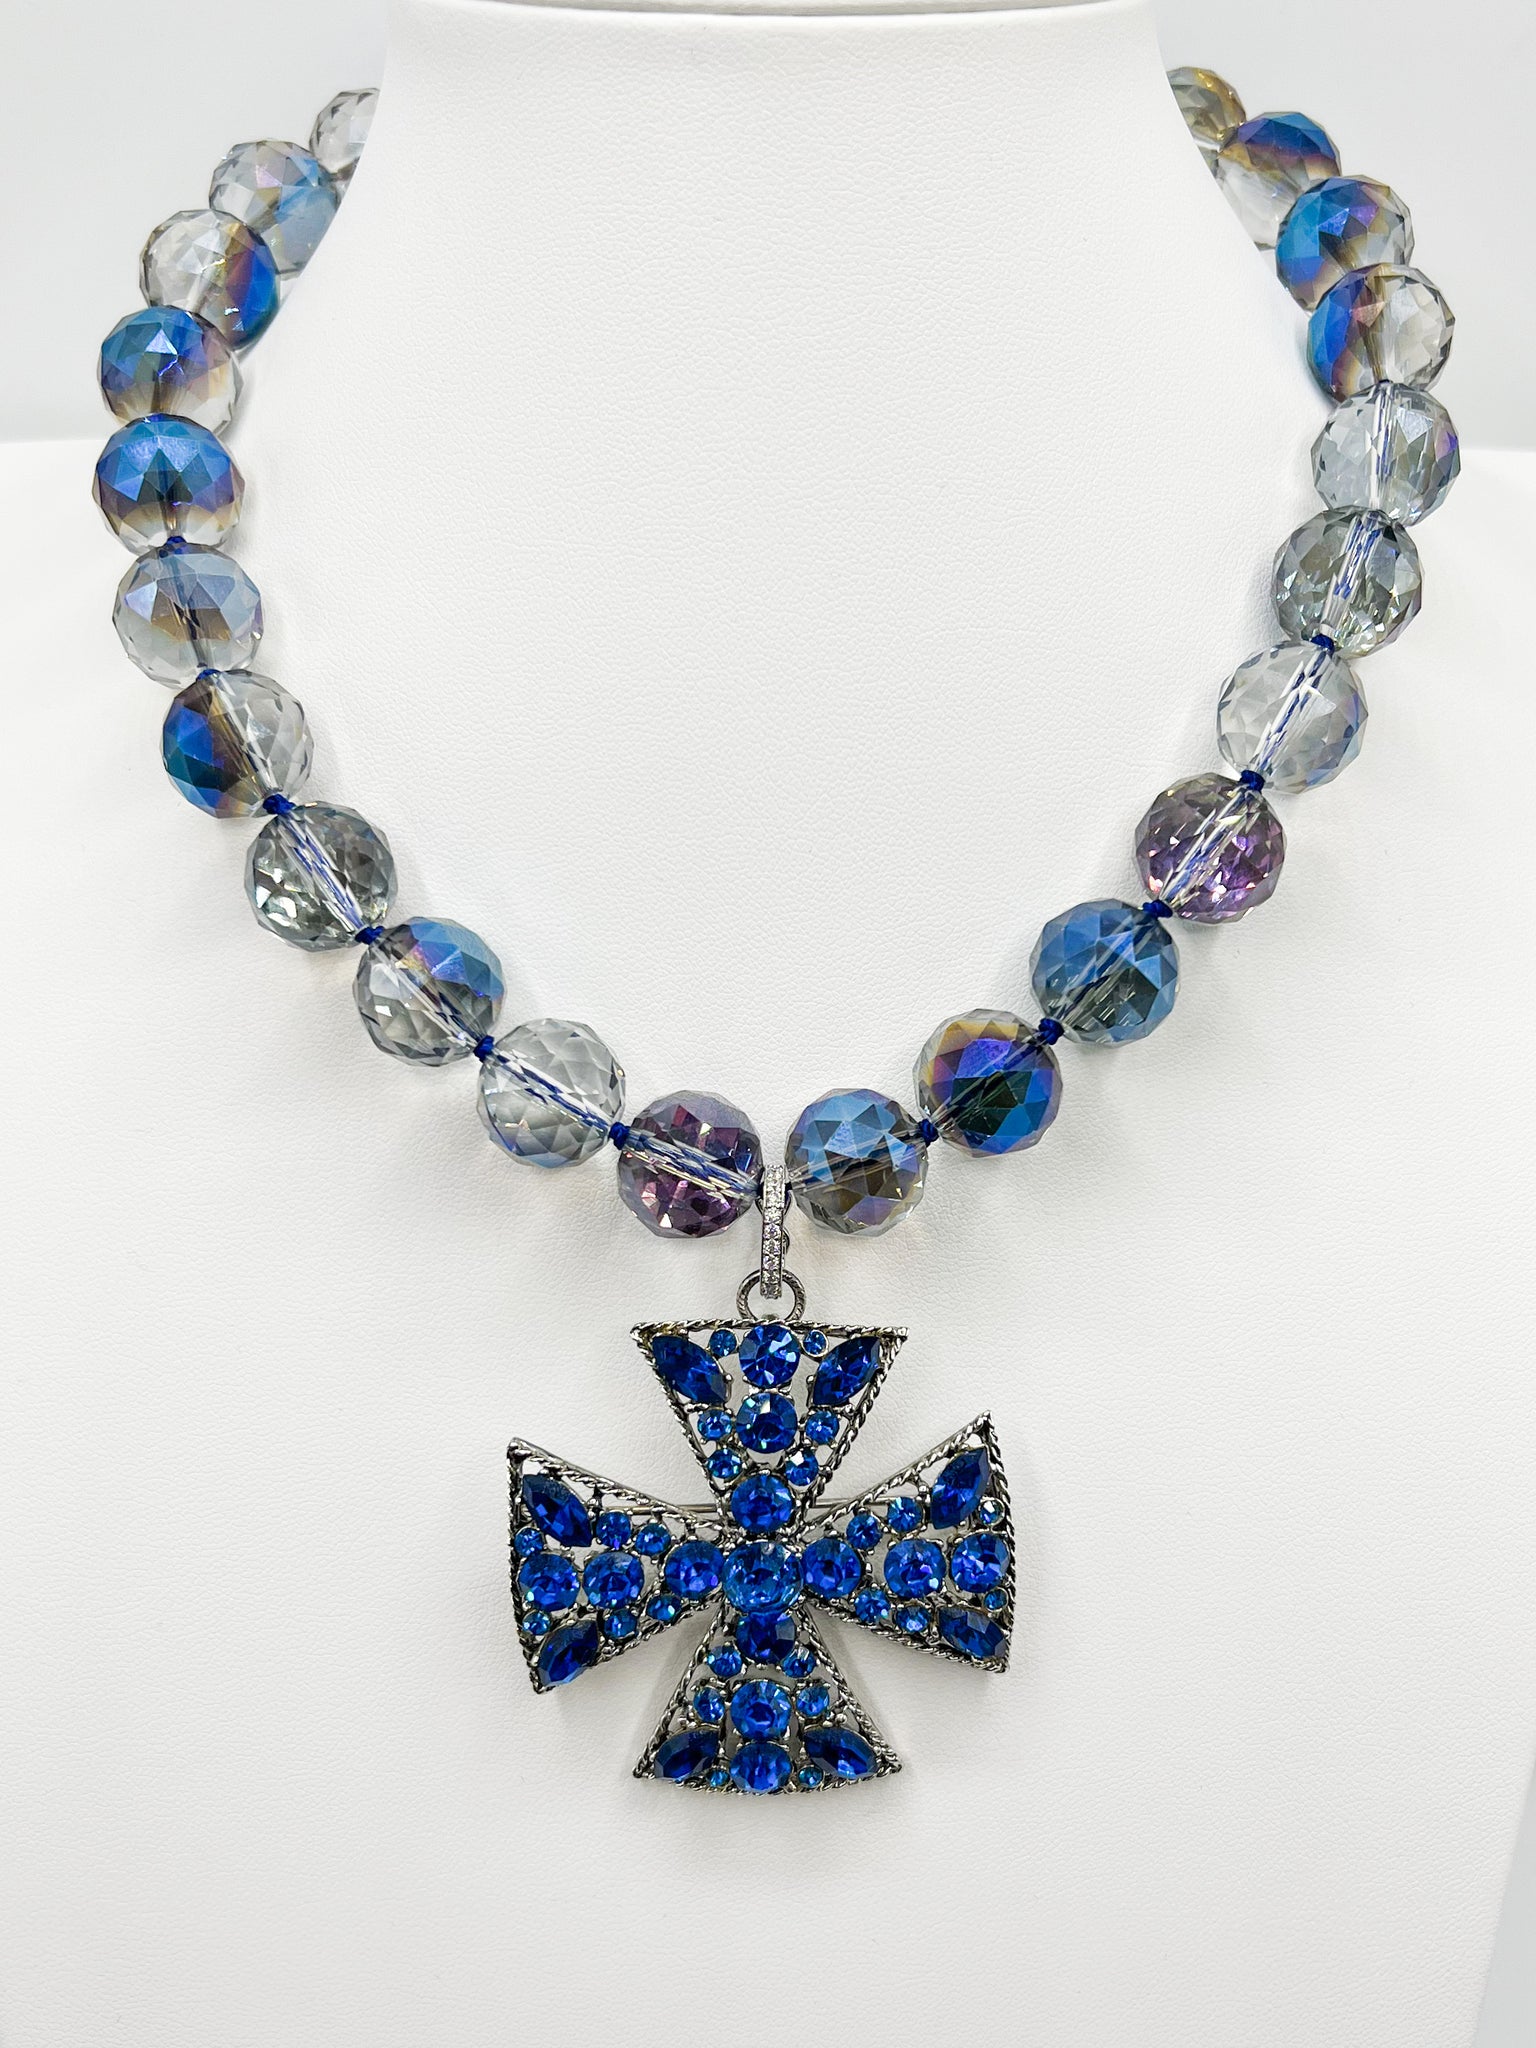 The Valletta necklace